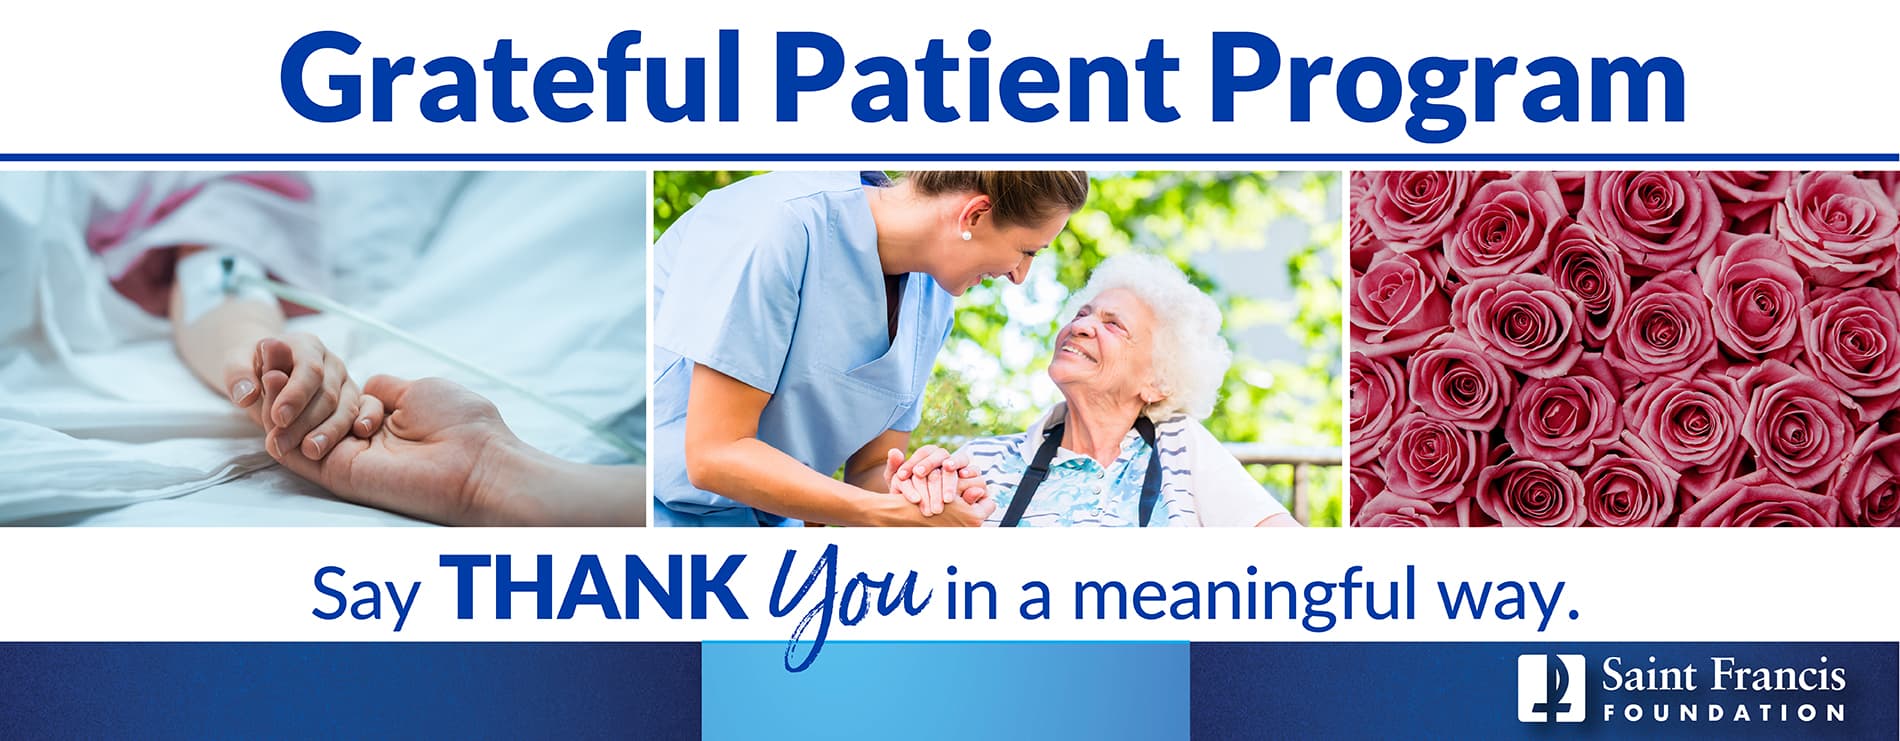 Grateful Patient Program